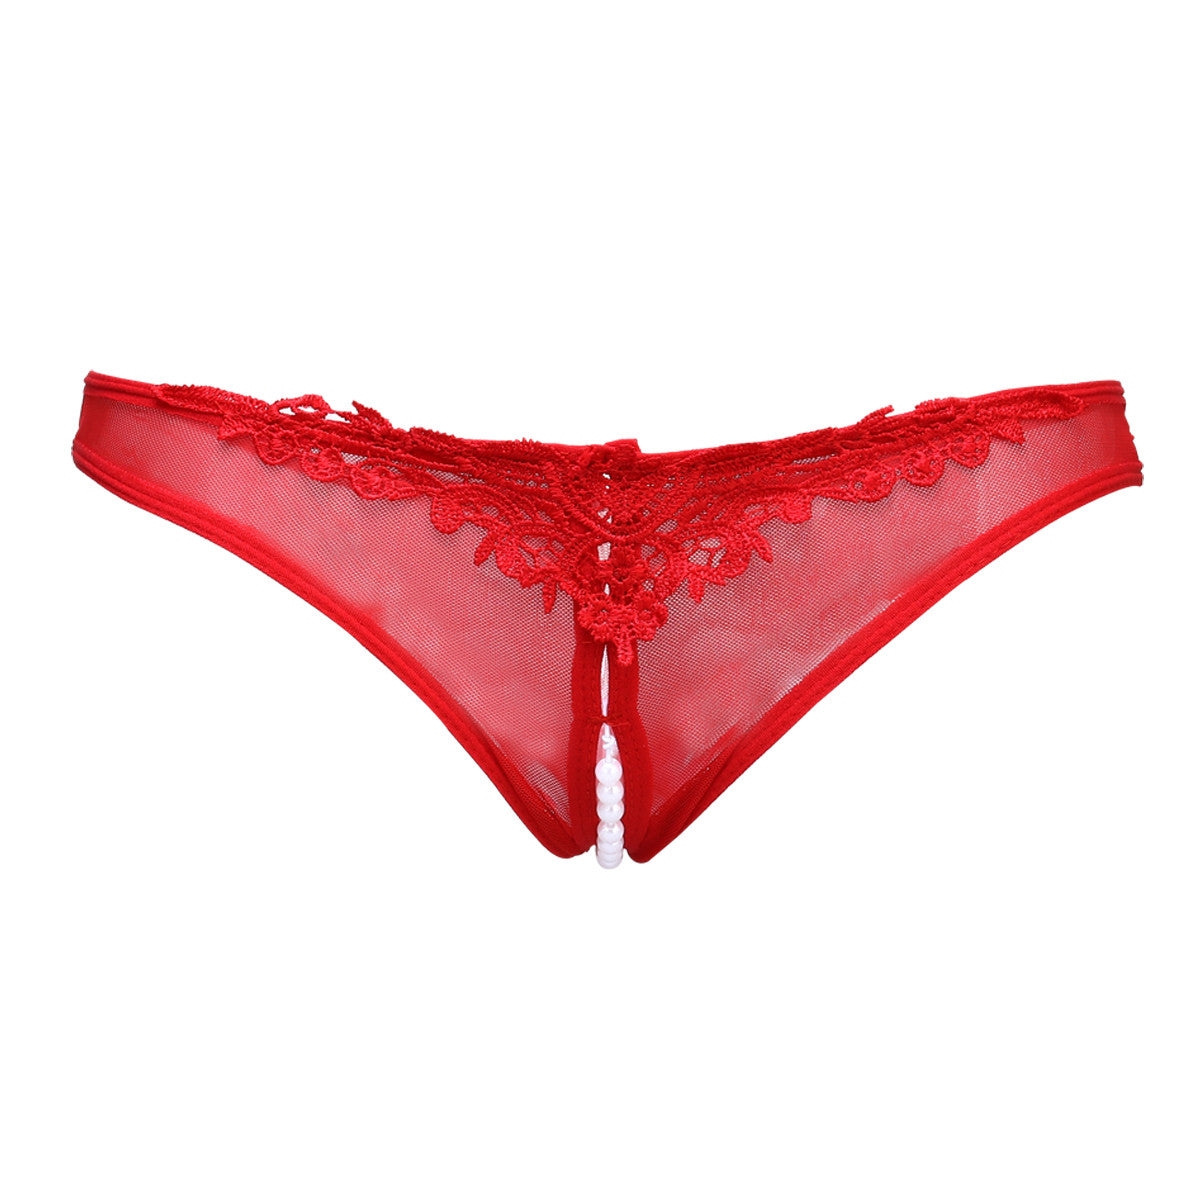 Pearl Open Crotch Mesh Briefs Erotic Lingerie Sex Underwear for Women picture